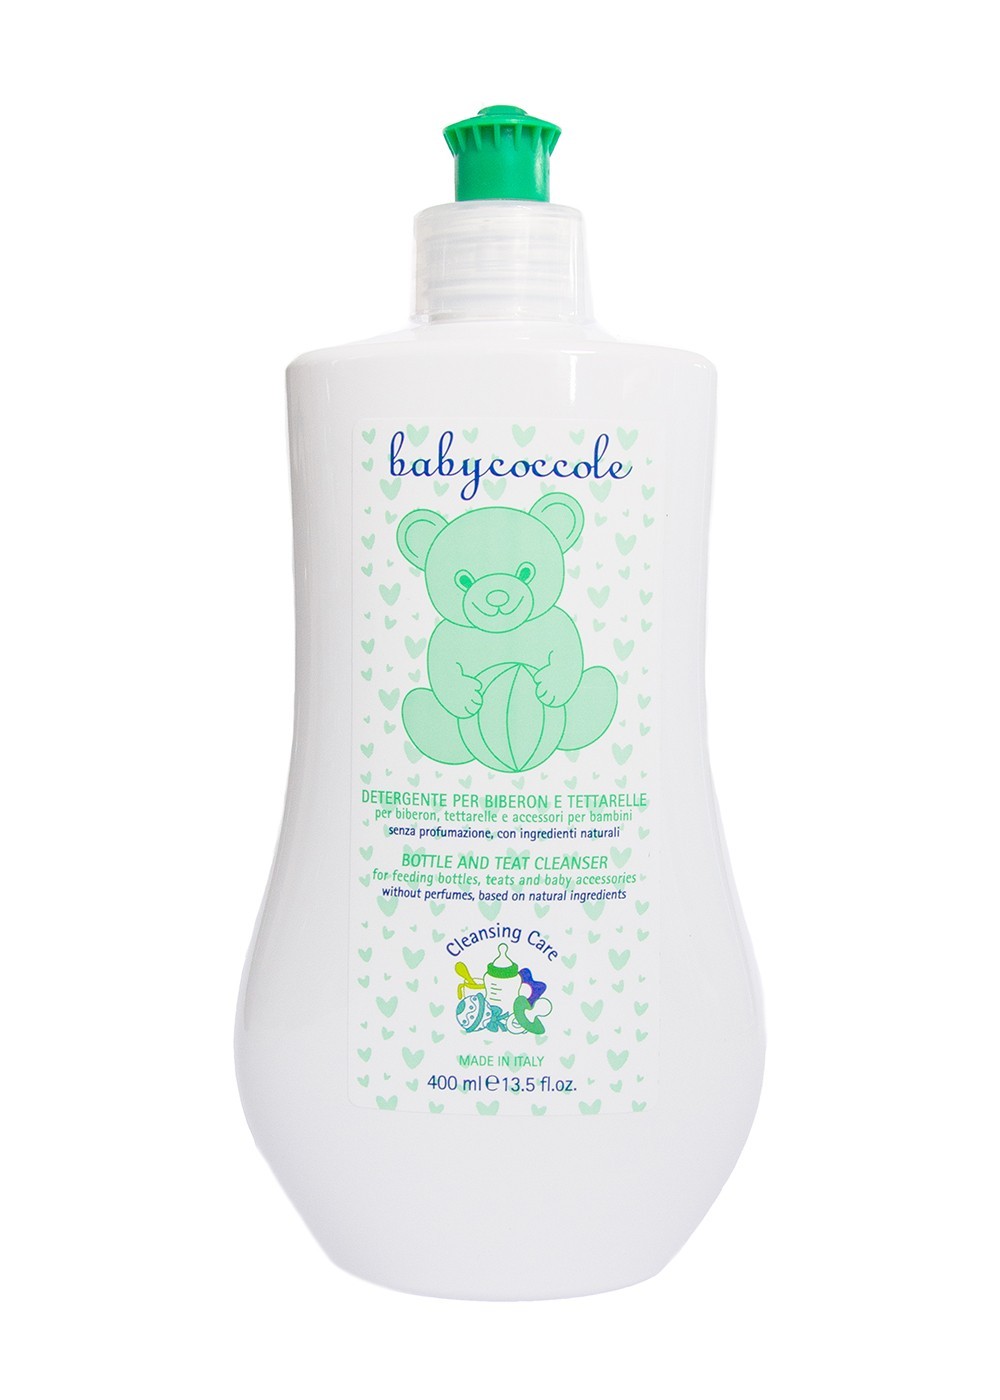 Detergente-Biberon-Tettarelle-Accessori_Babycoccole